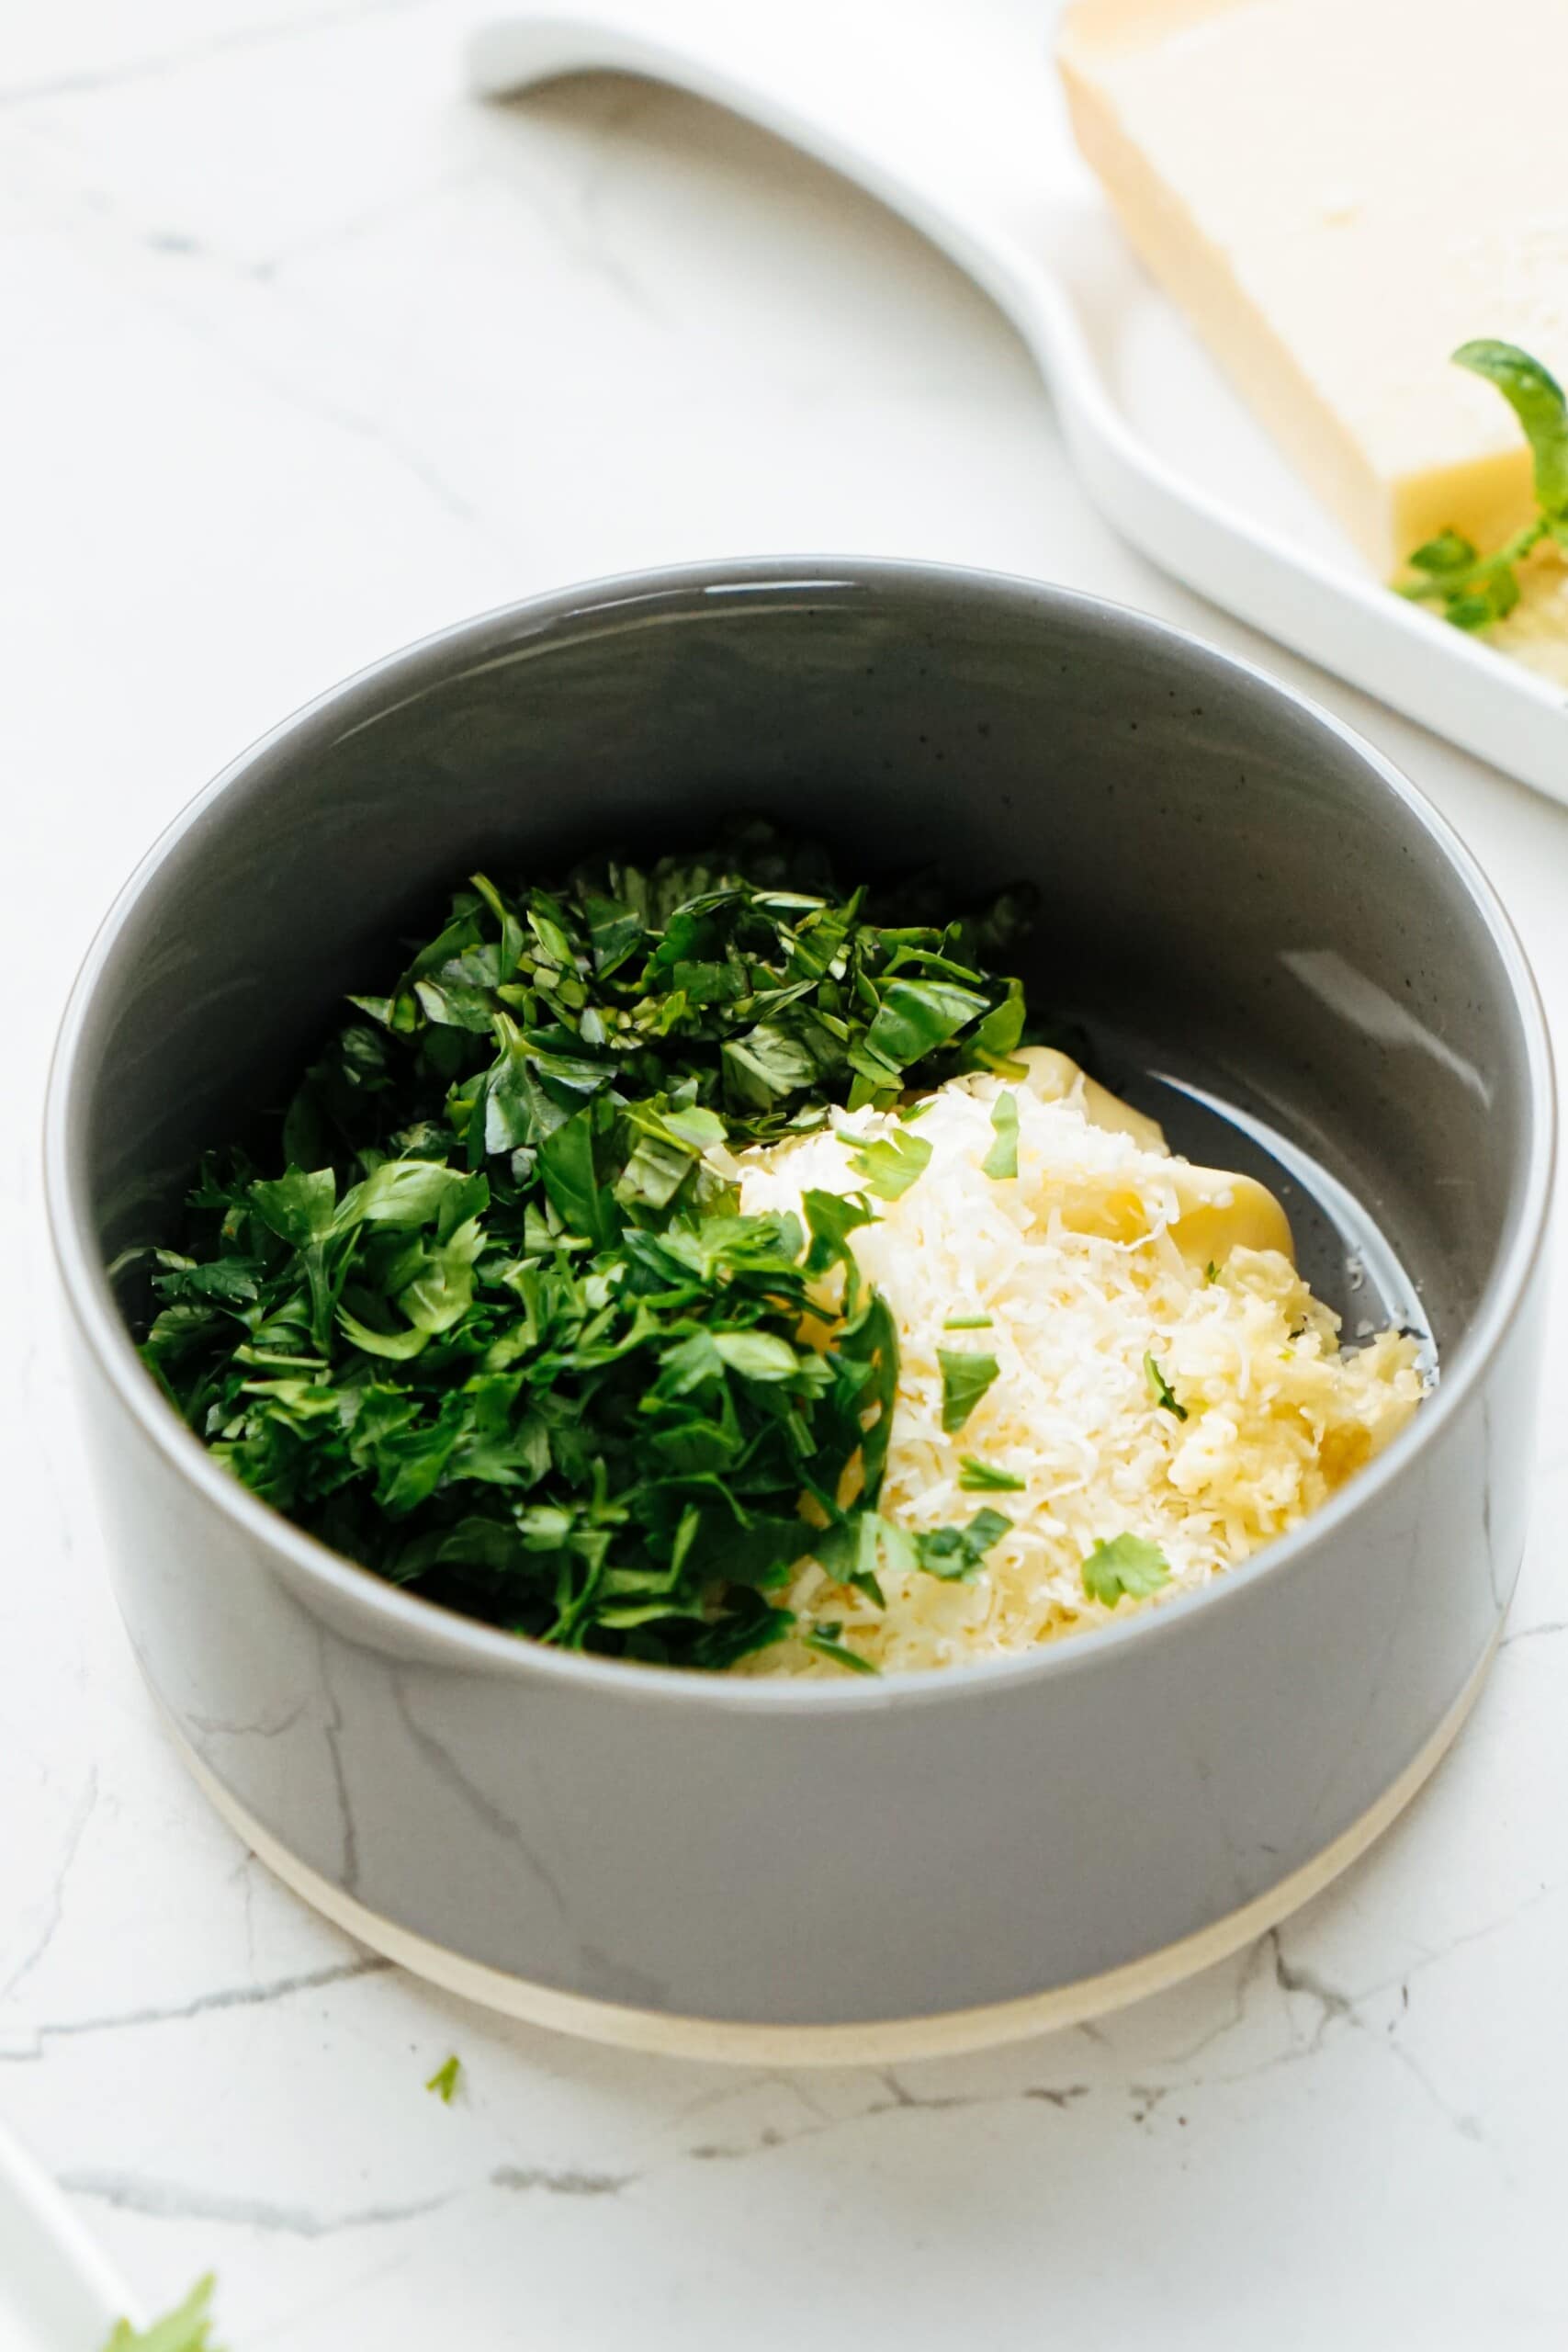 Parmesan herb mixture in a bowl 